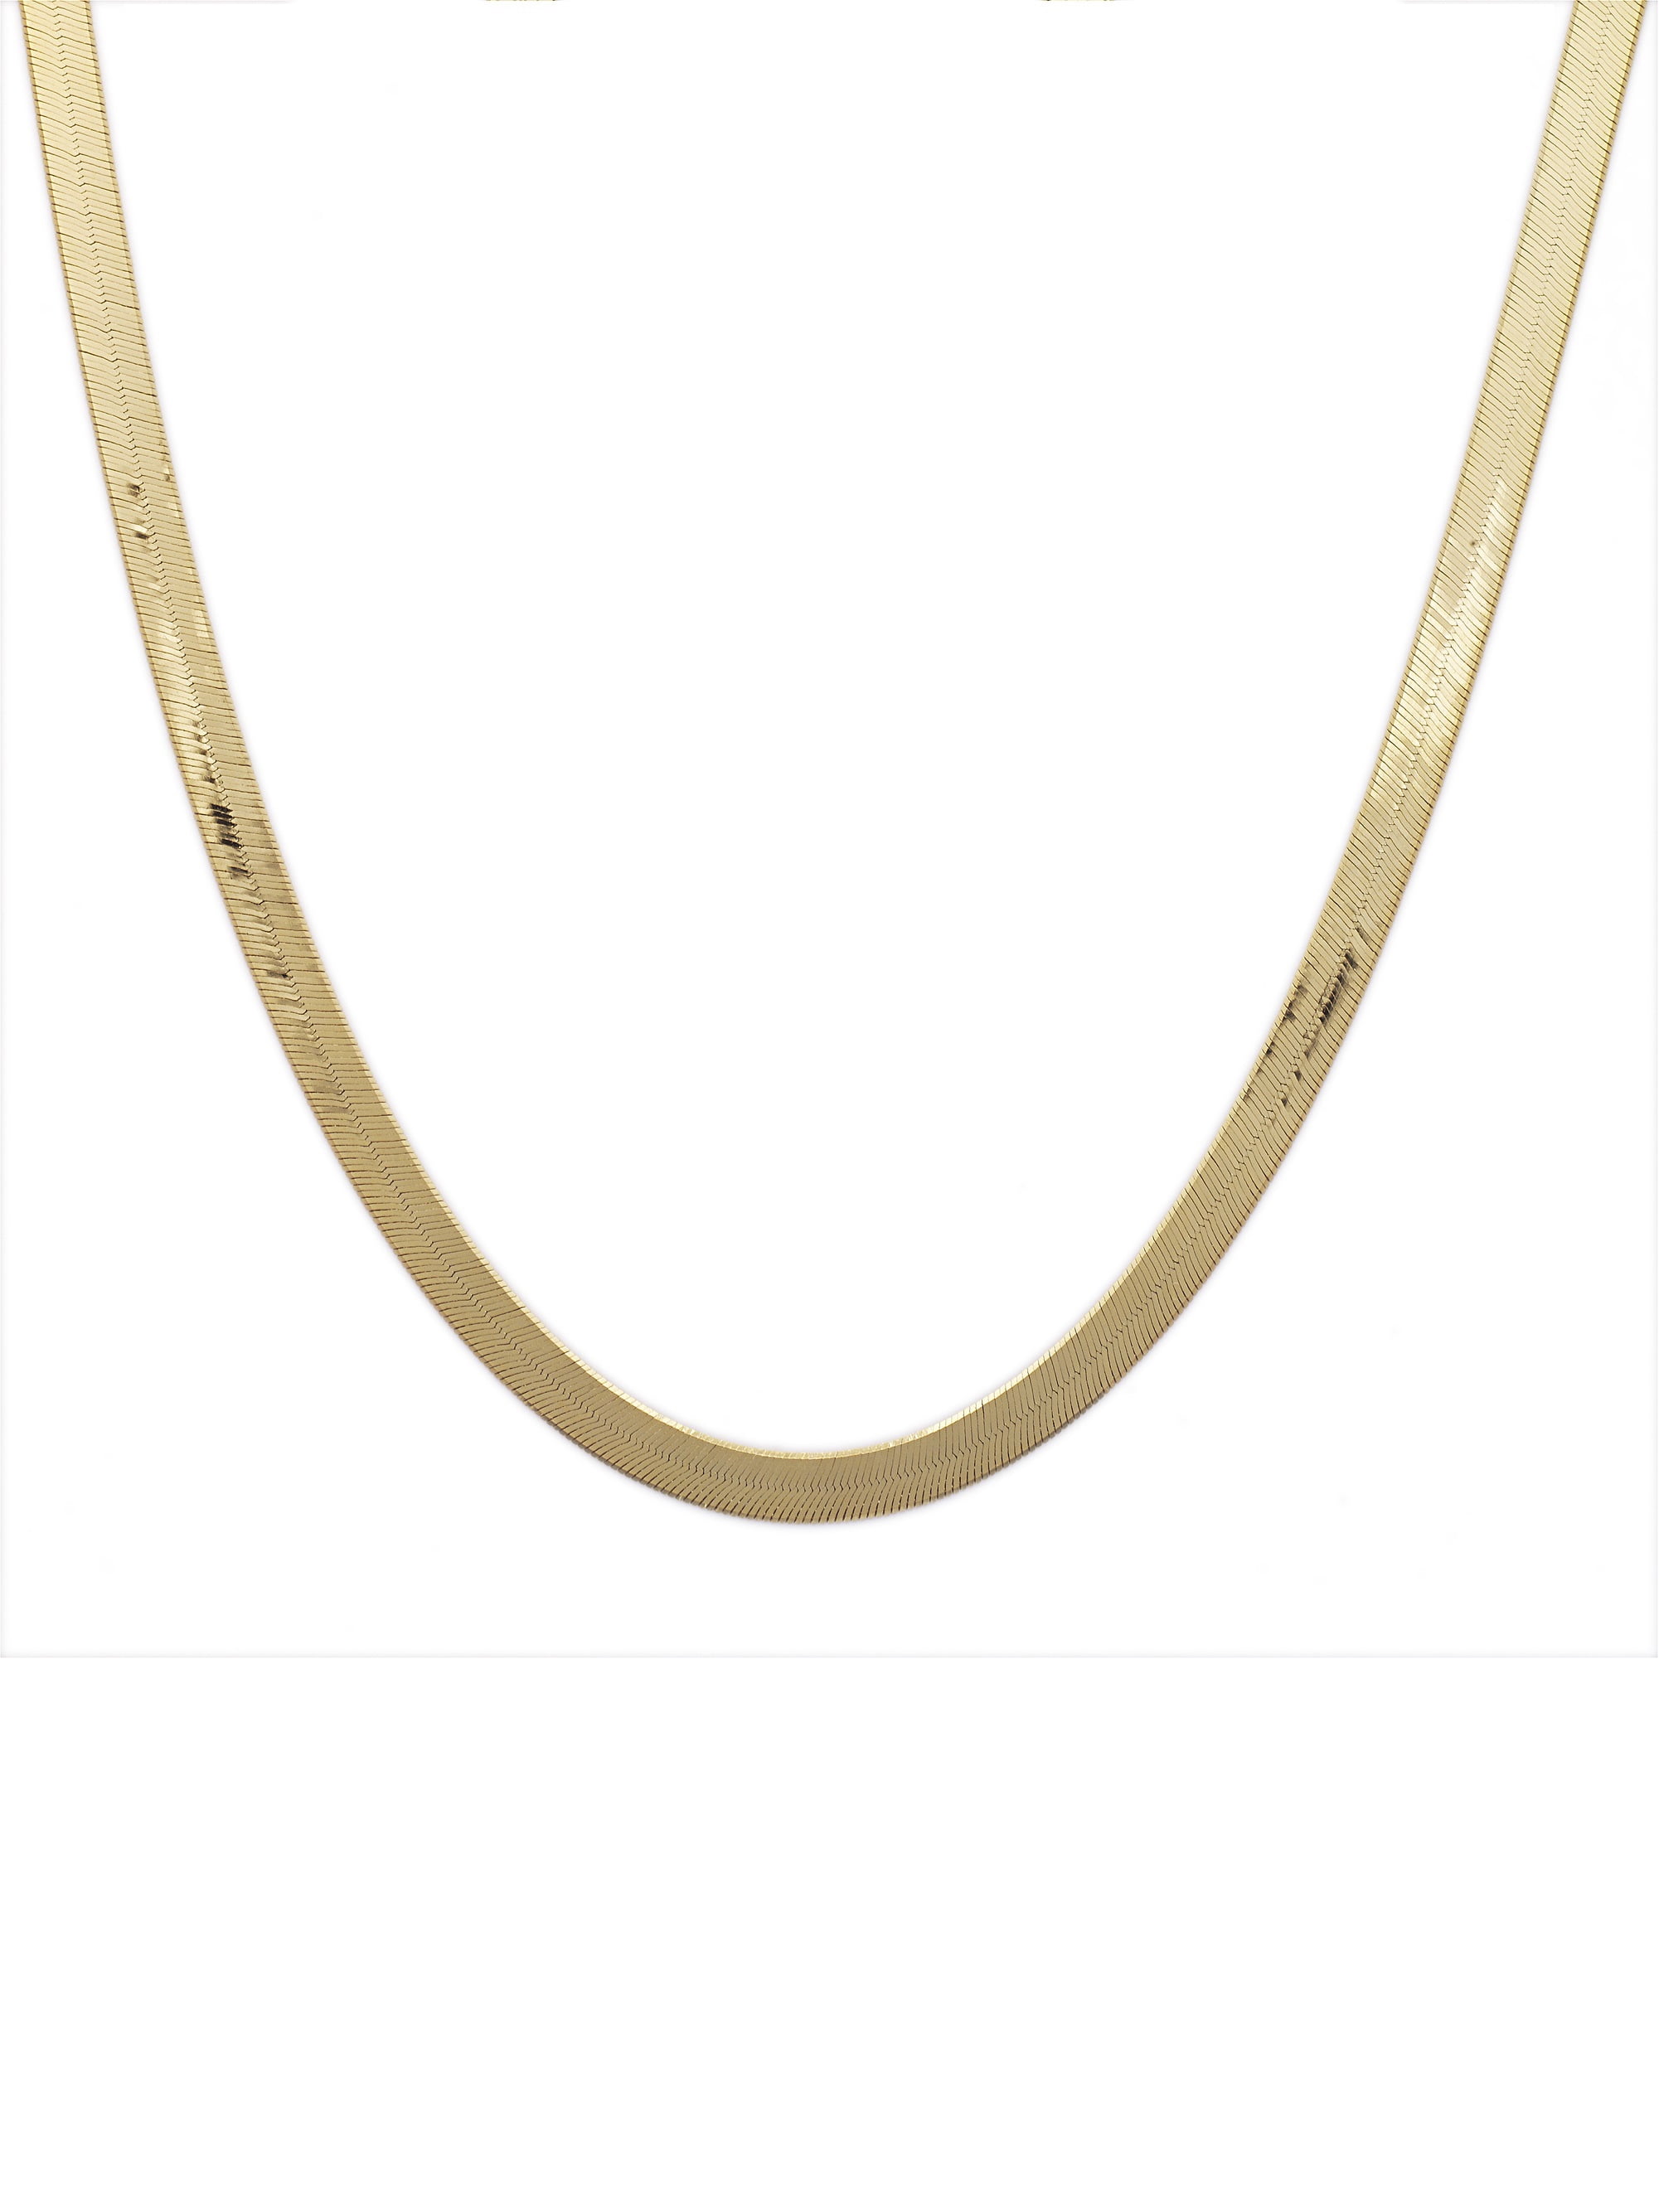 Real 10K Yellow Gold Herringbone Chain 18 Inch 10MM Necklace Ladies Men's SALE!!